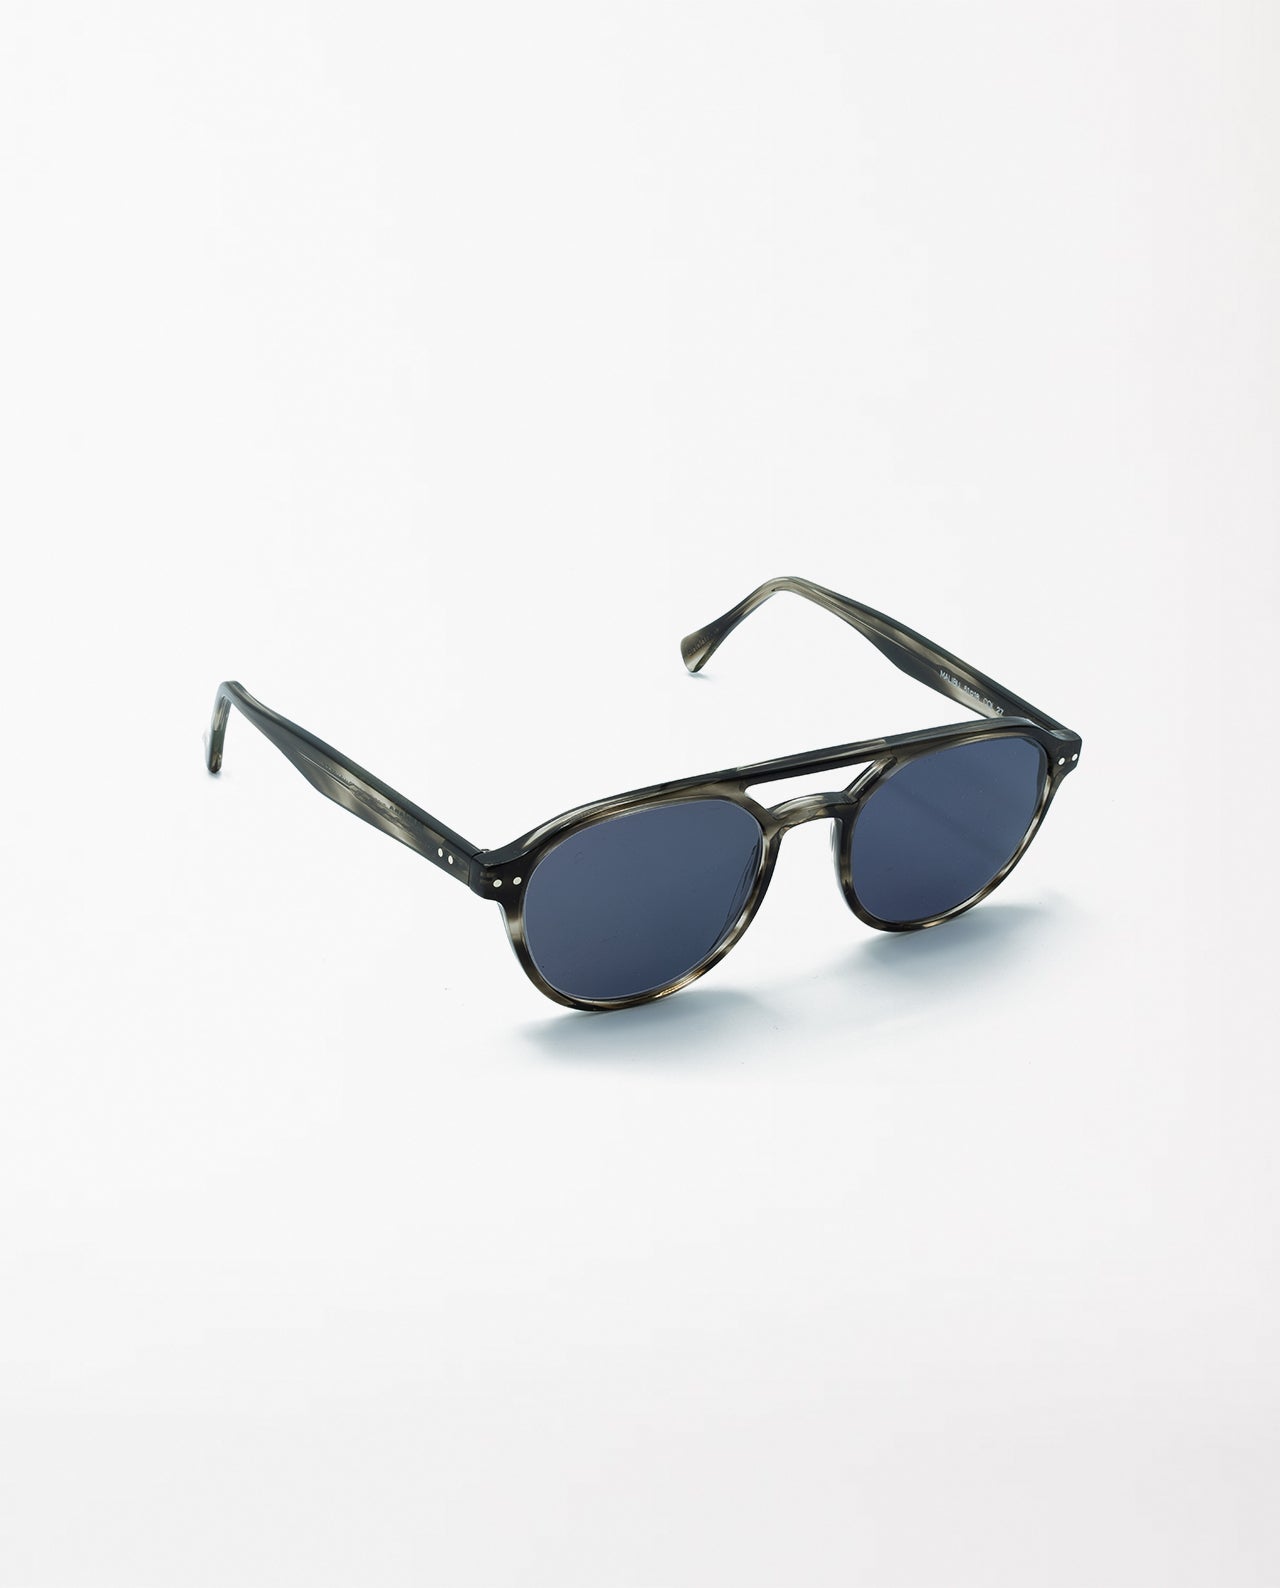 marché commun marlone eyewear lunettes solaires soleil origine france garantie malibu dark grey